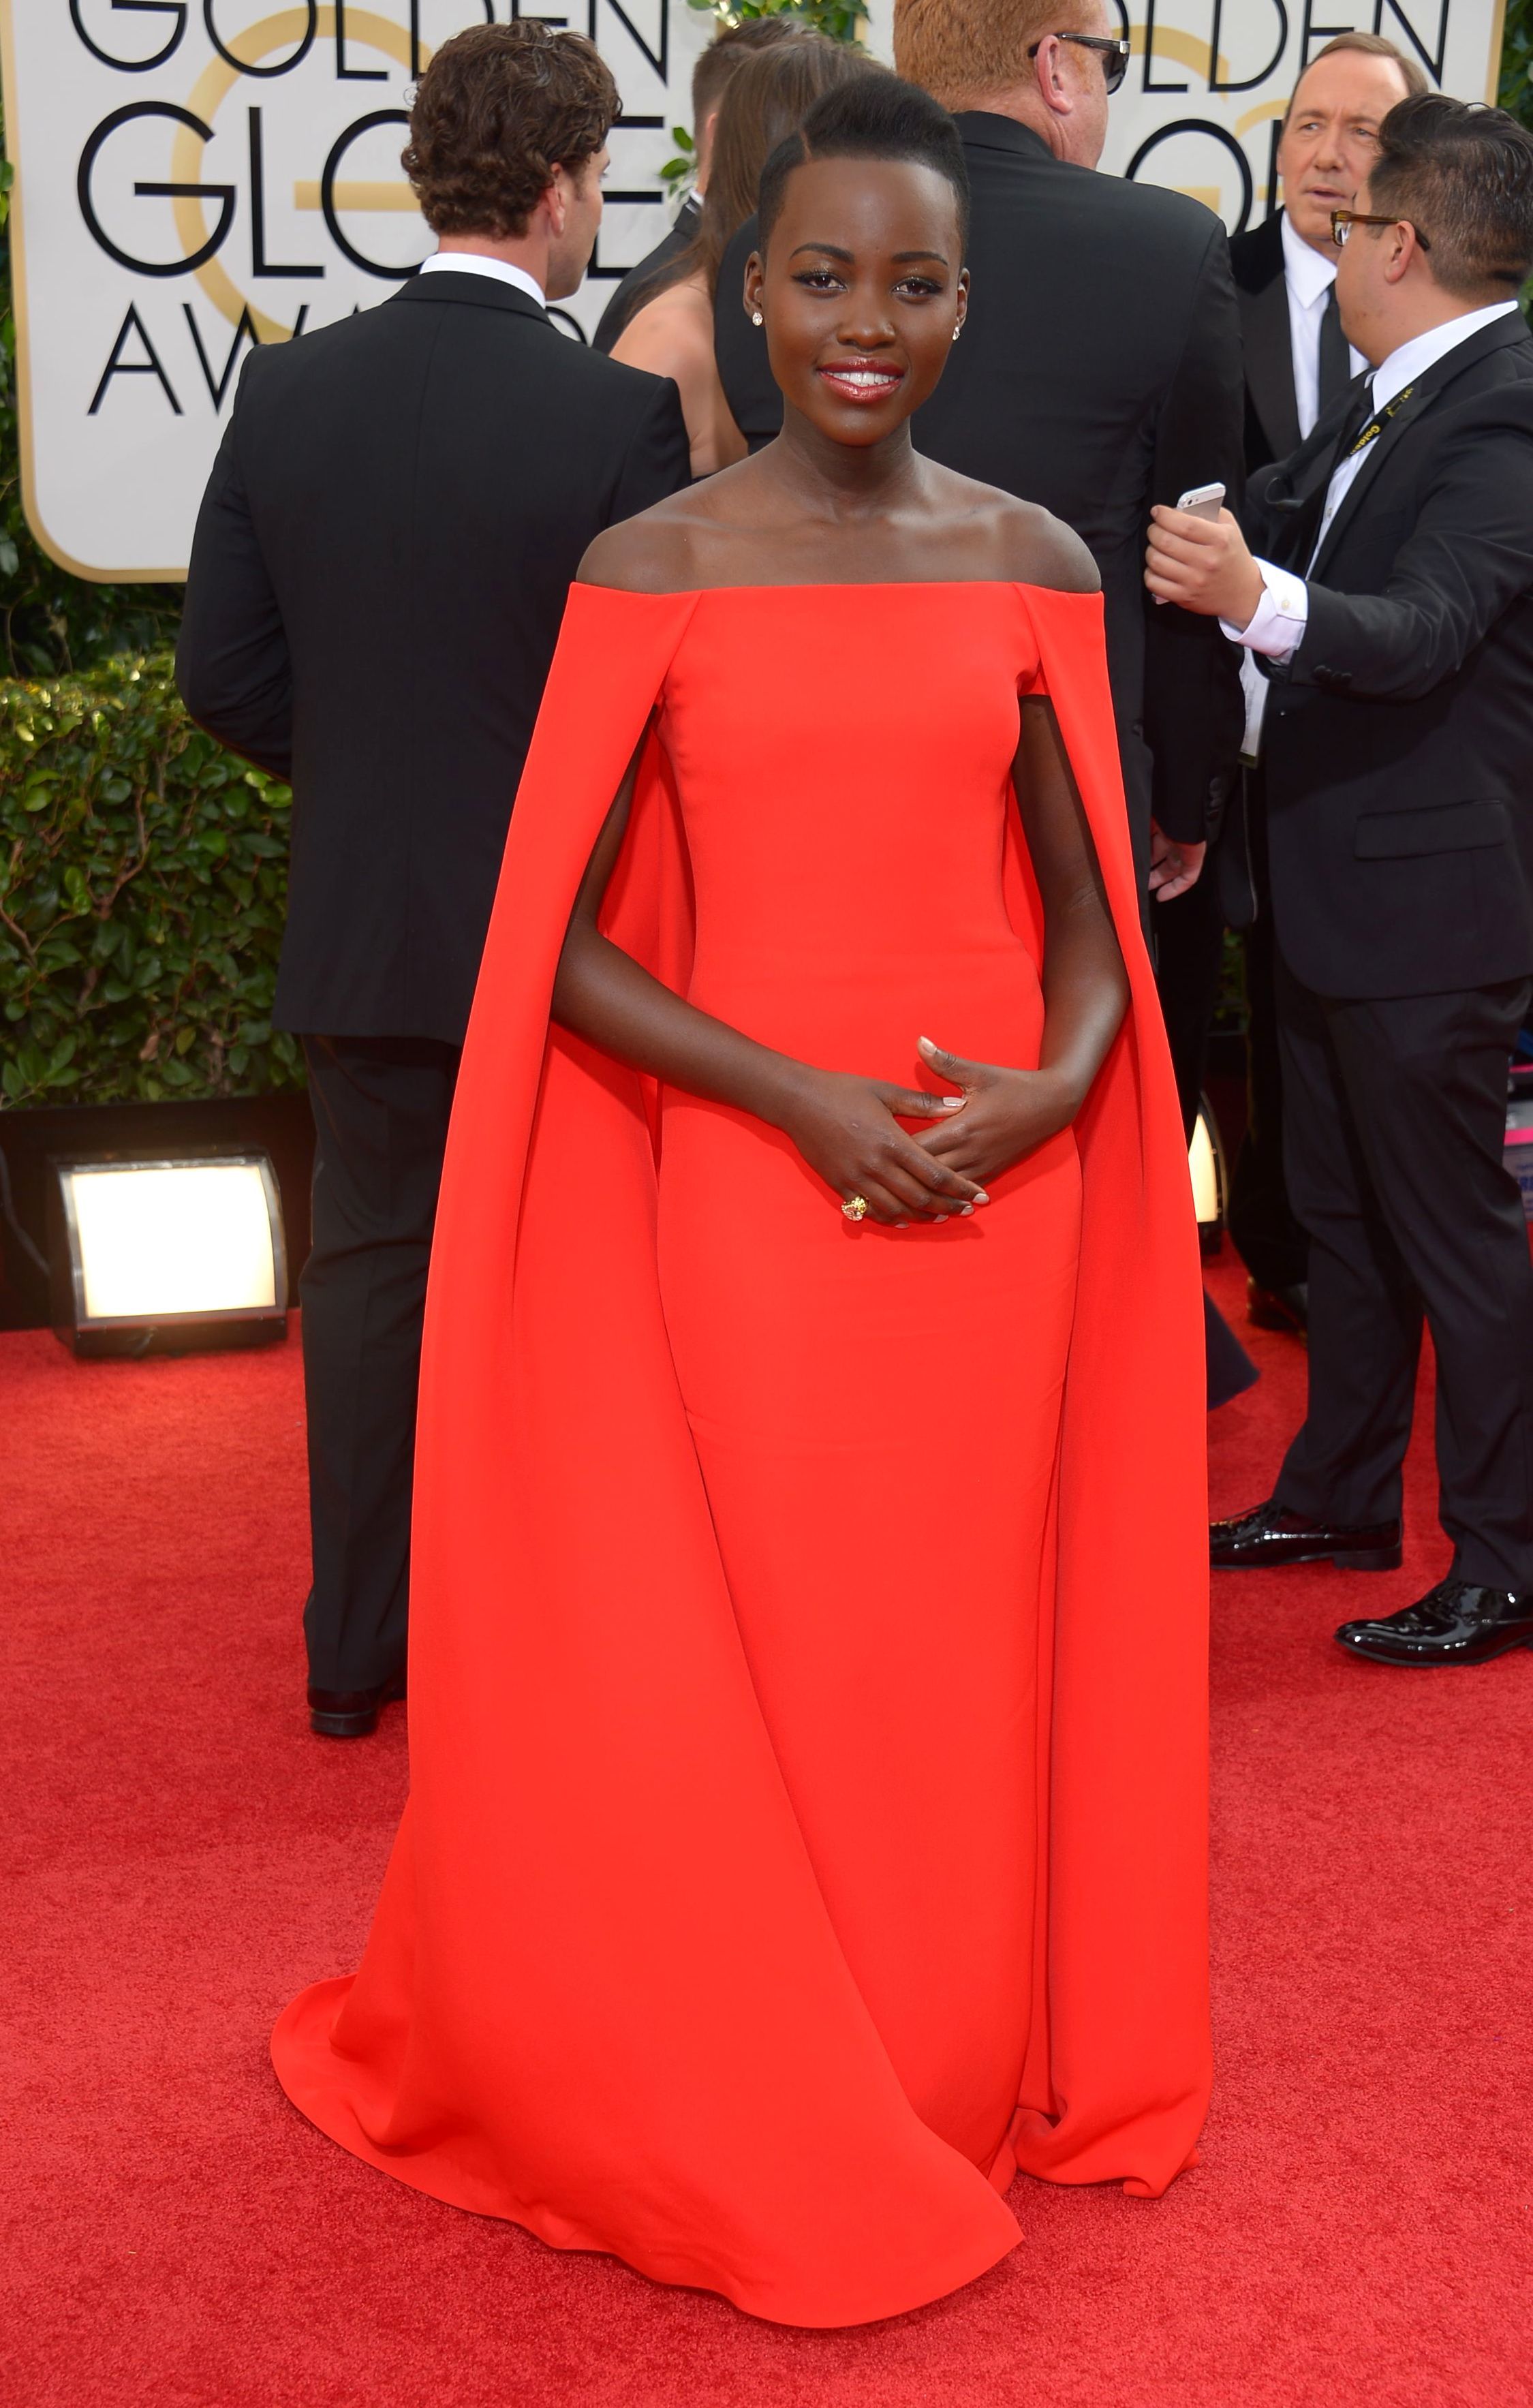 Gold Dresses Worn on the Golden Globe Awards Red Carpets